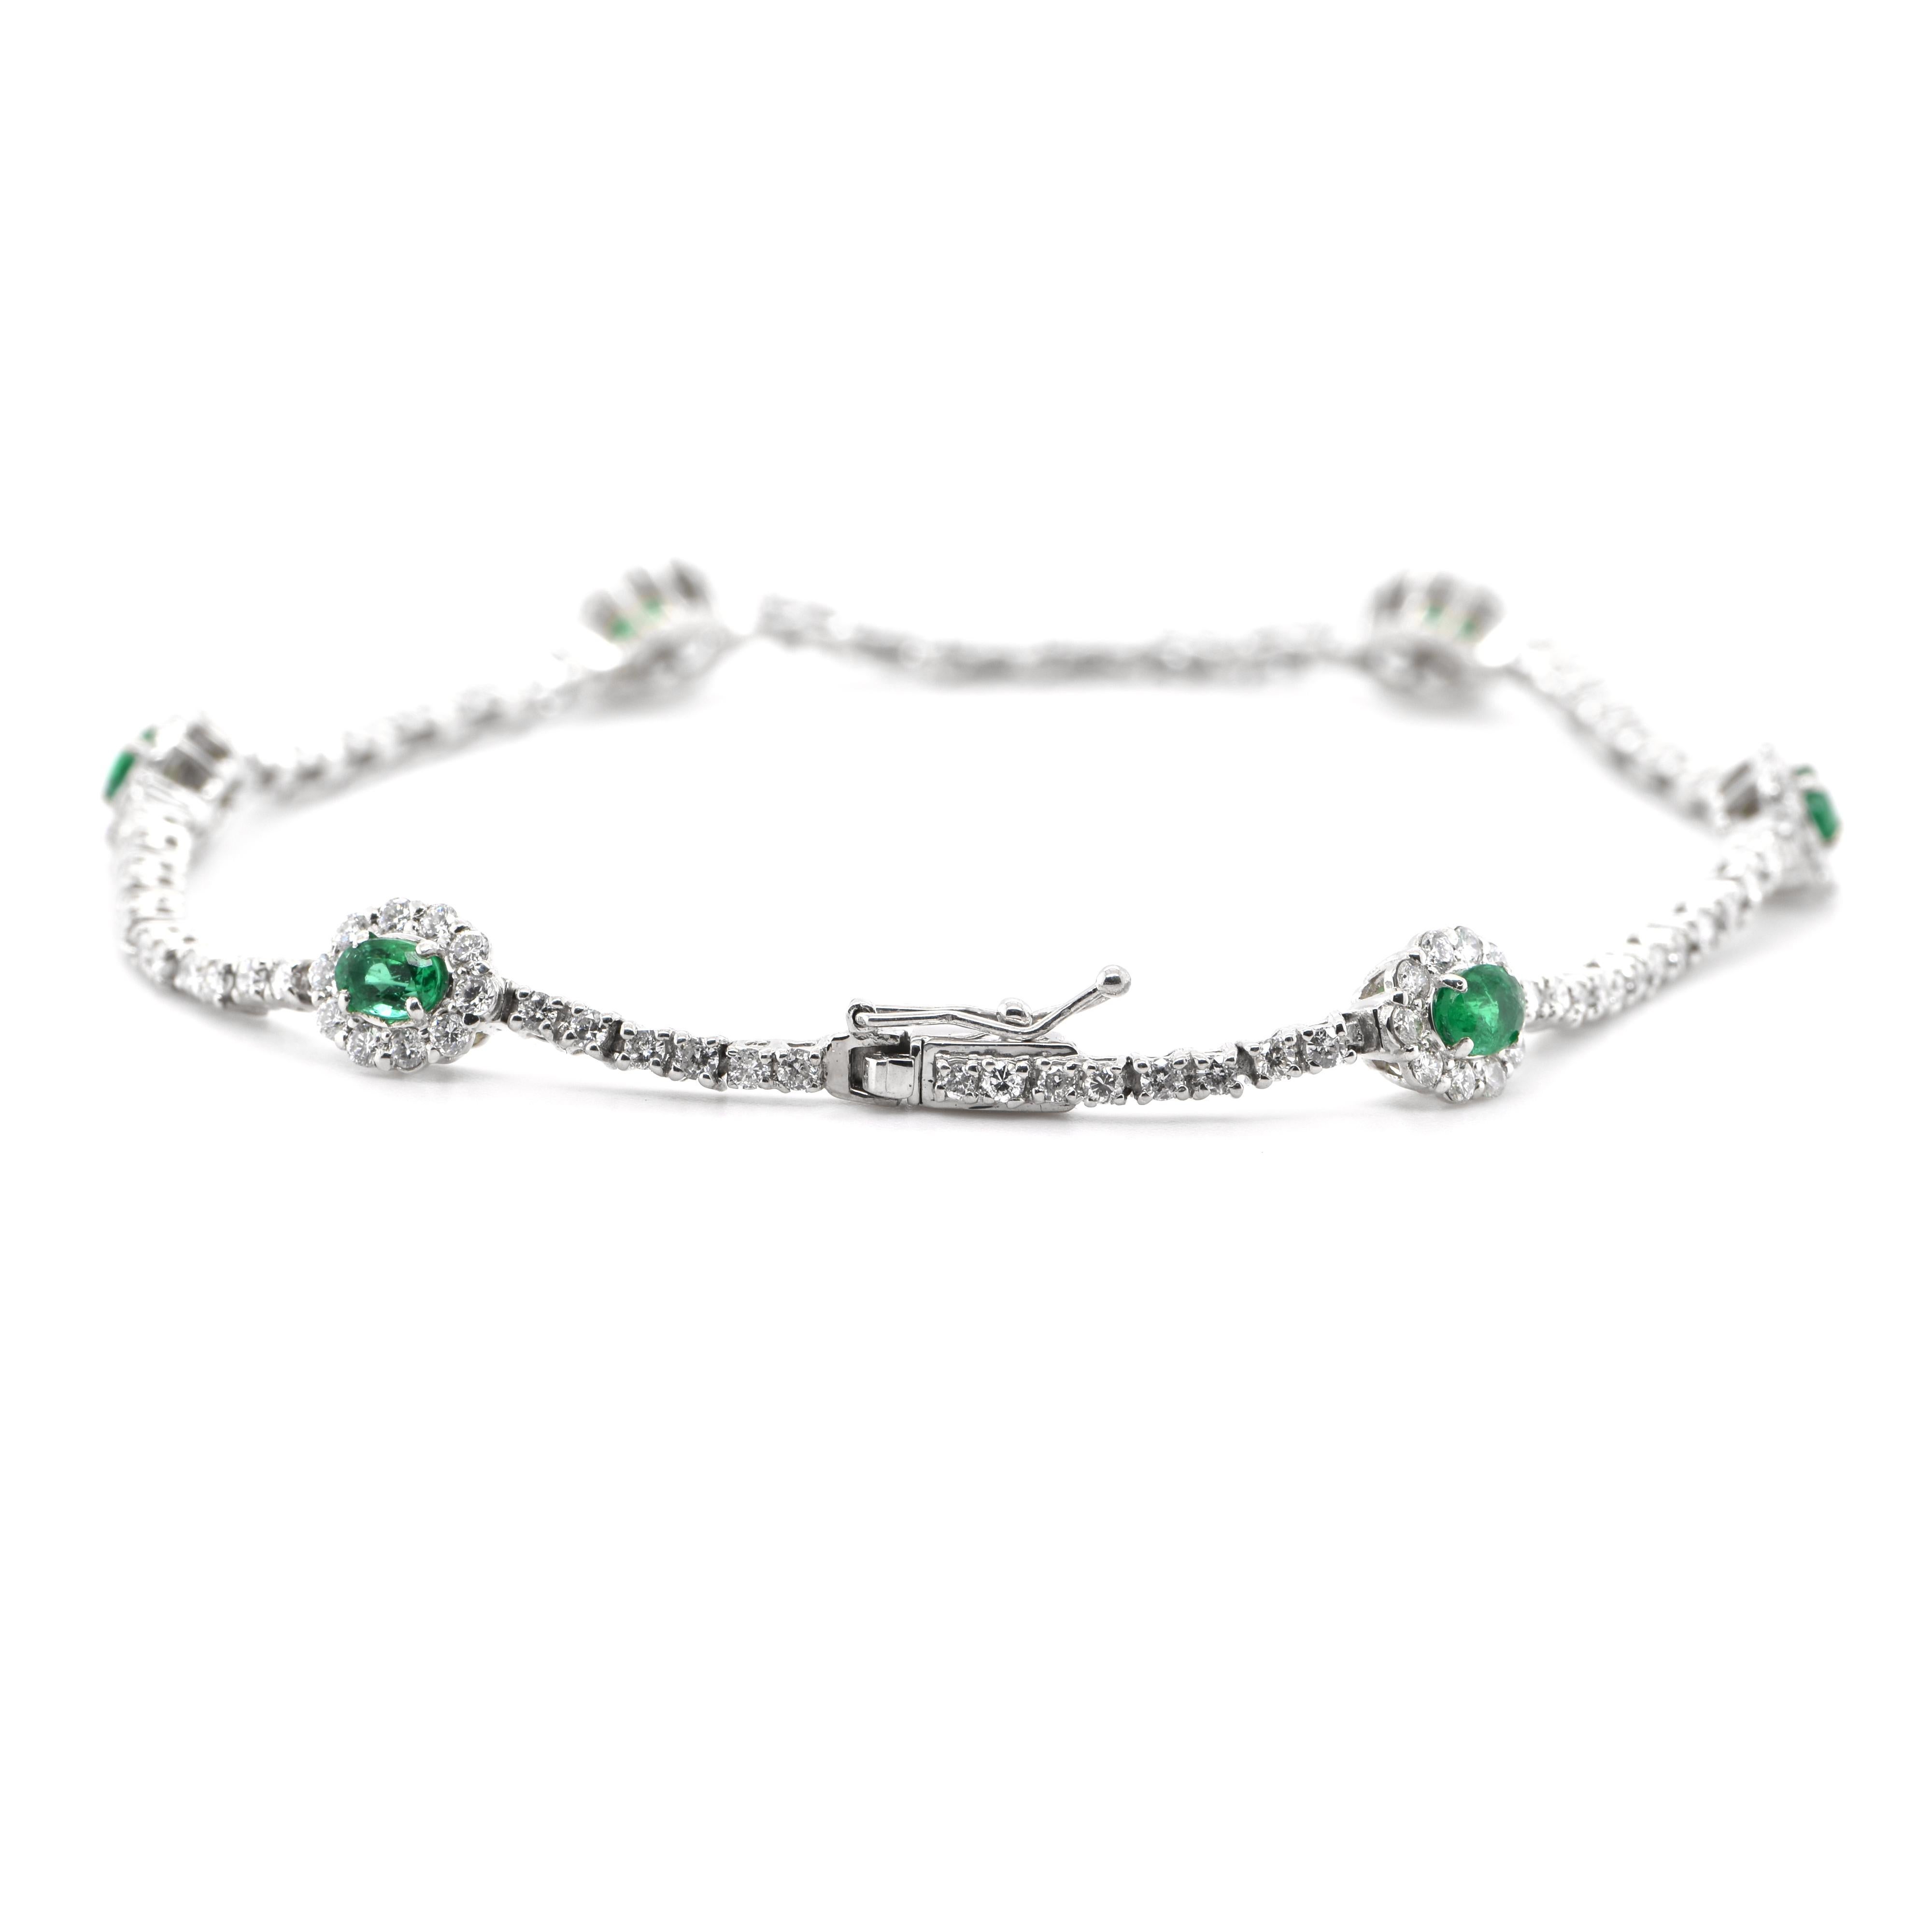 Modern 0.86 Carat Natural Emeralds and Diamonds Tennis Bracelet Set in Platinum